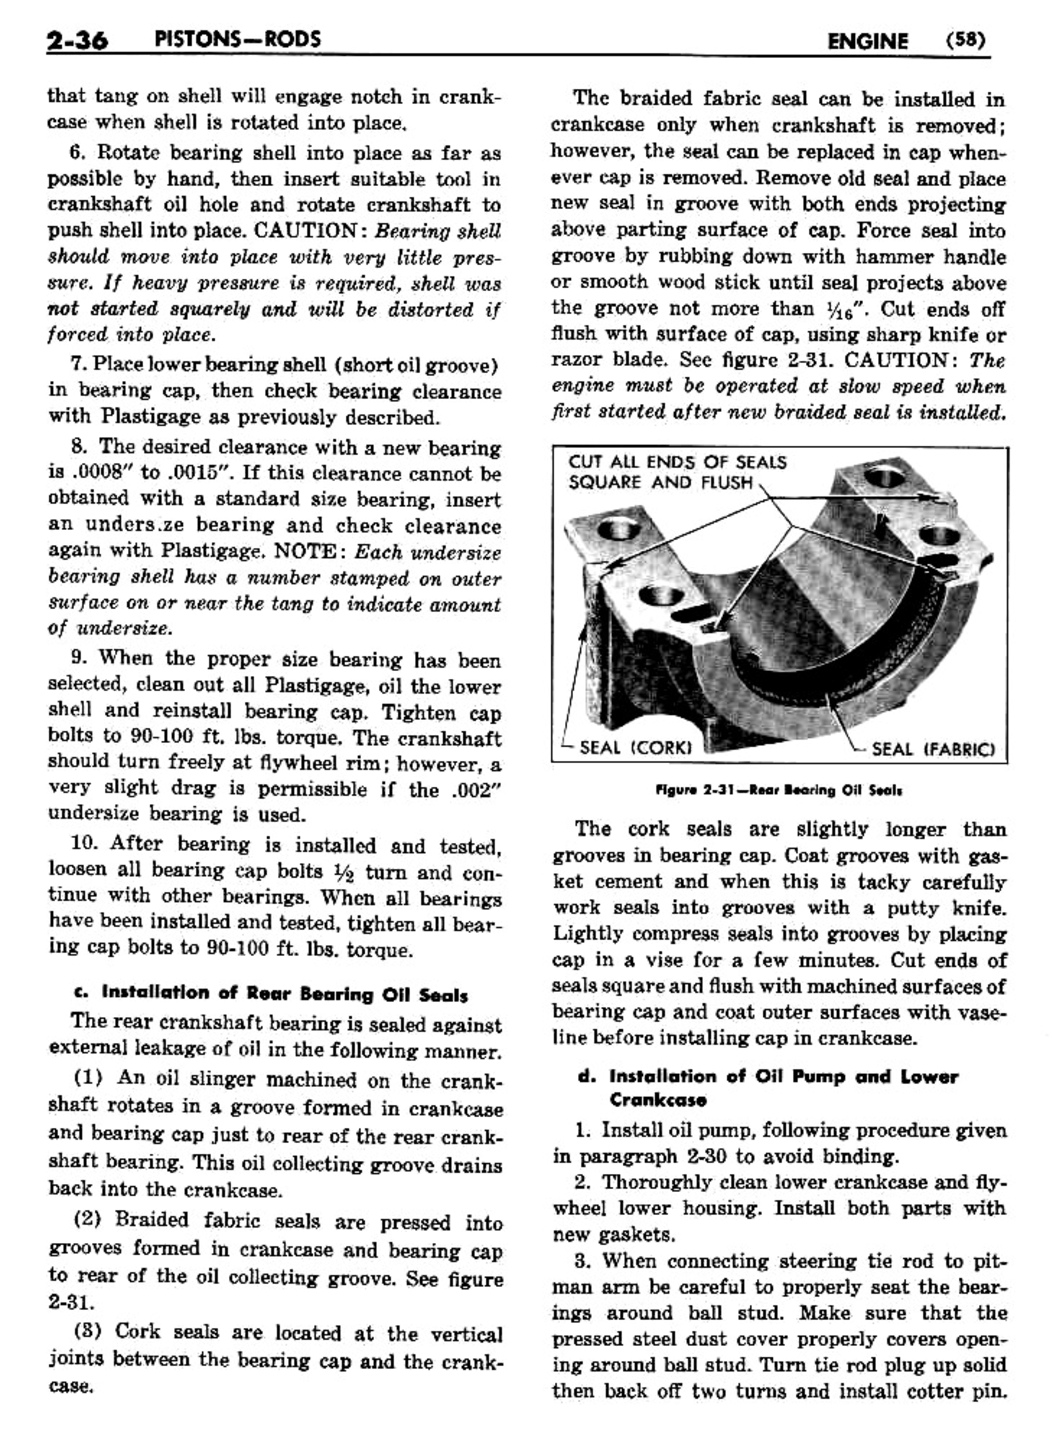 n_03 1948 Buick Shop Manual - Engine-036-036.jpg